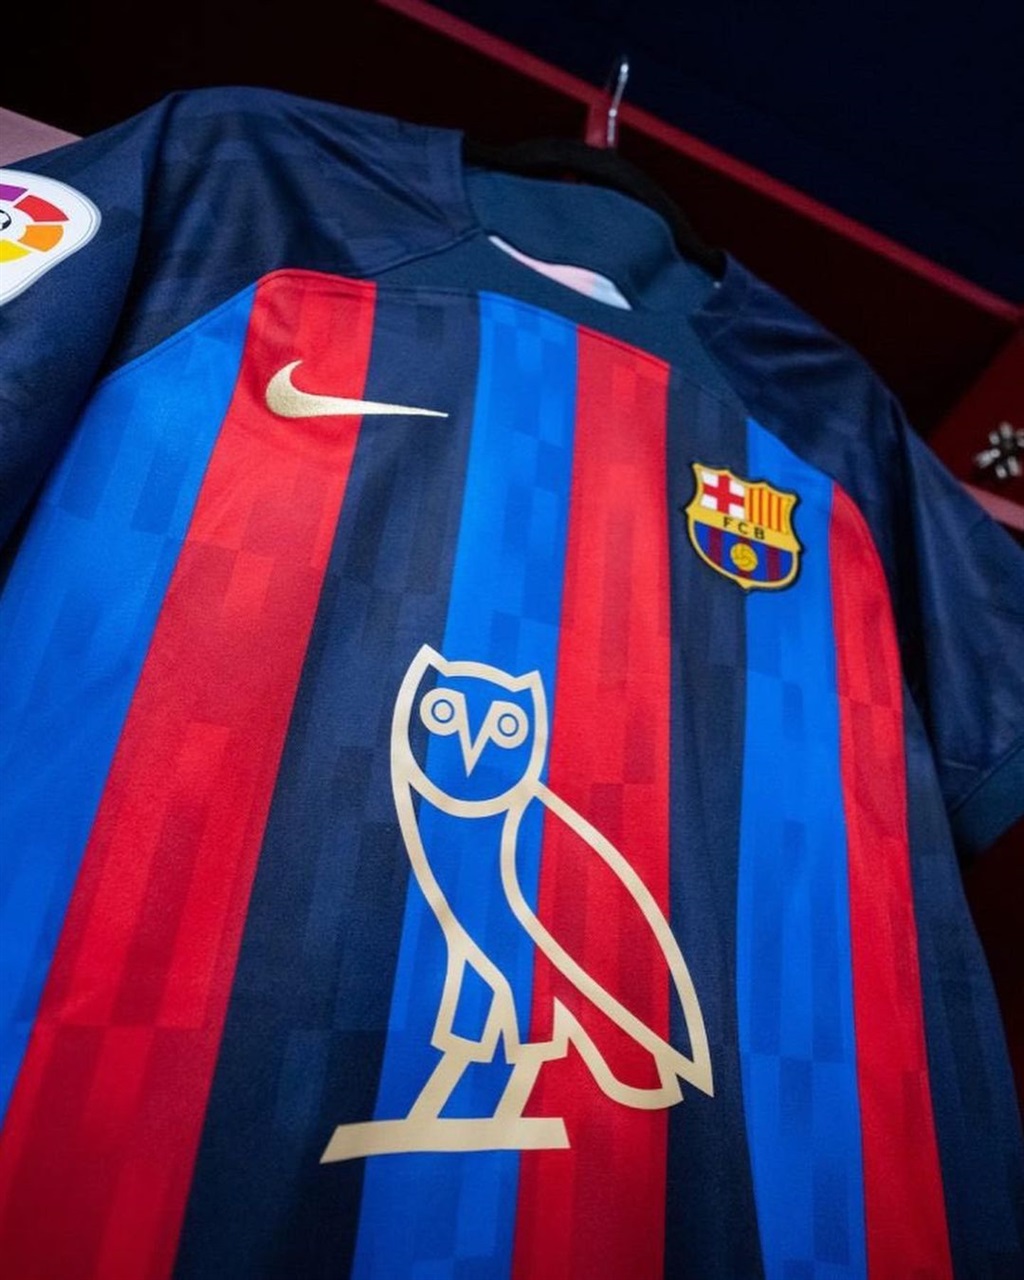 Barcelona's home kit with the OVO logo.